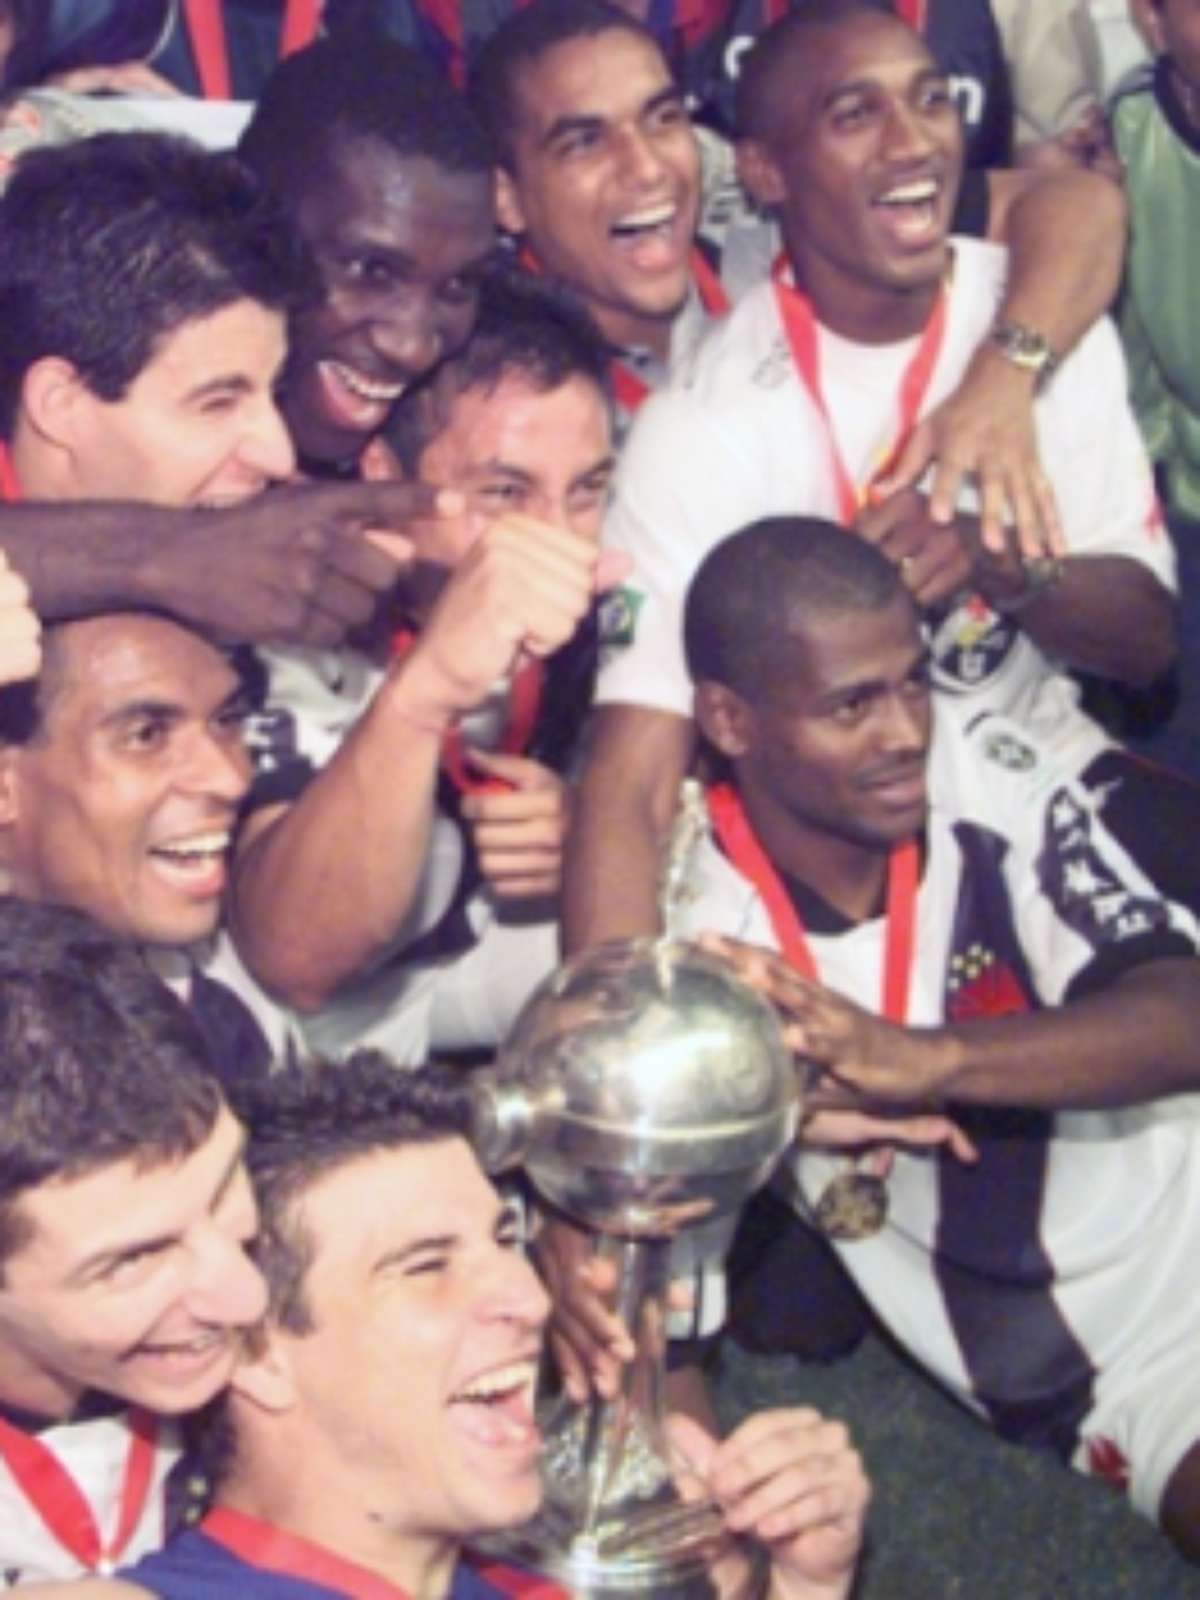 Vasco foi o 1º a vencer todos os jogos da fase de grupos da Libertadores